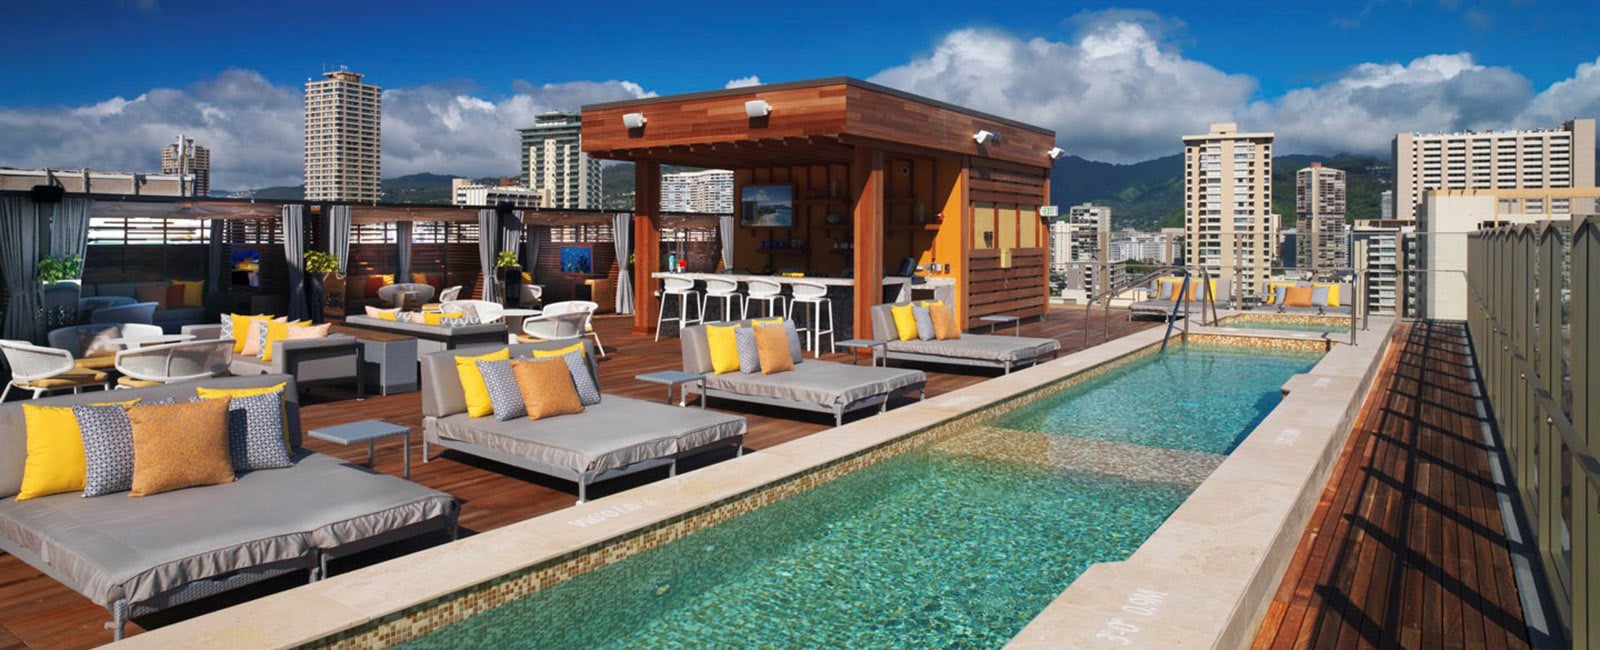 Pool Area of Hokulani Waikiki Resort in Honolulu, Hawaii